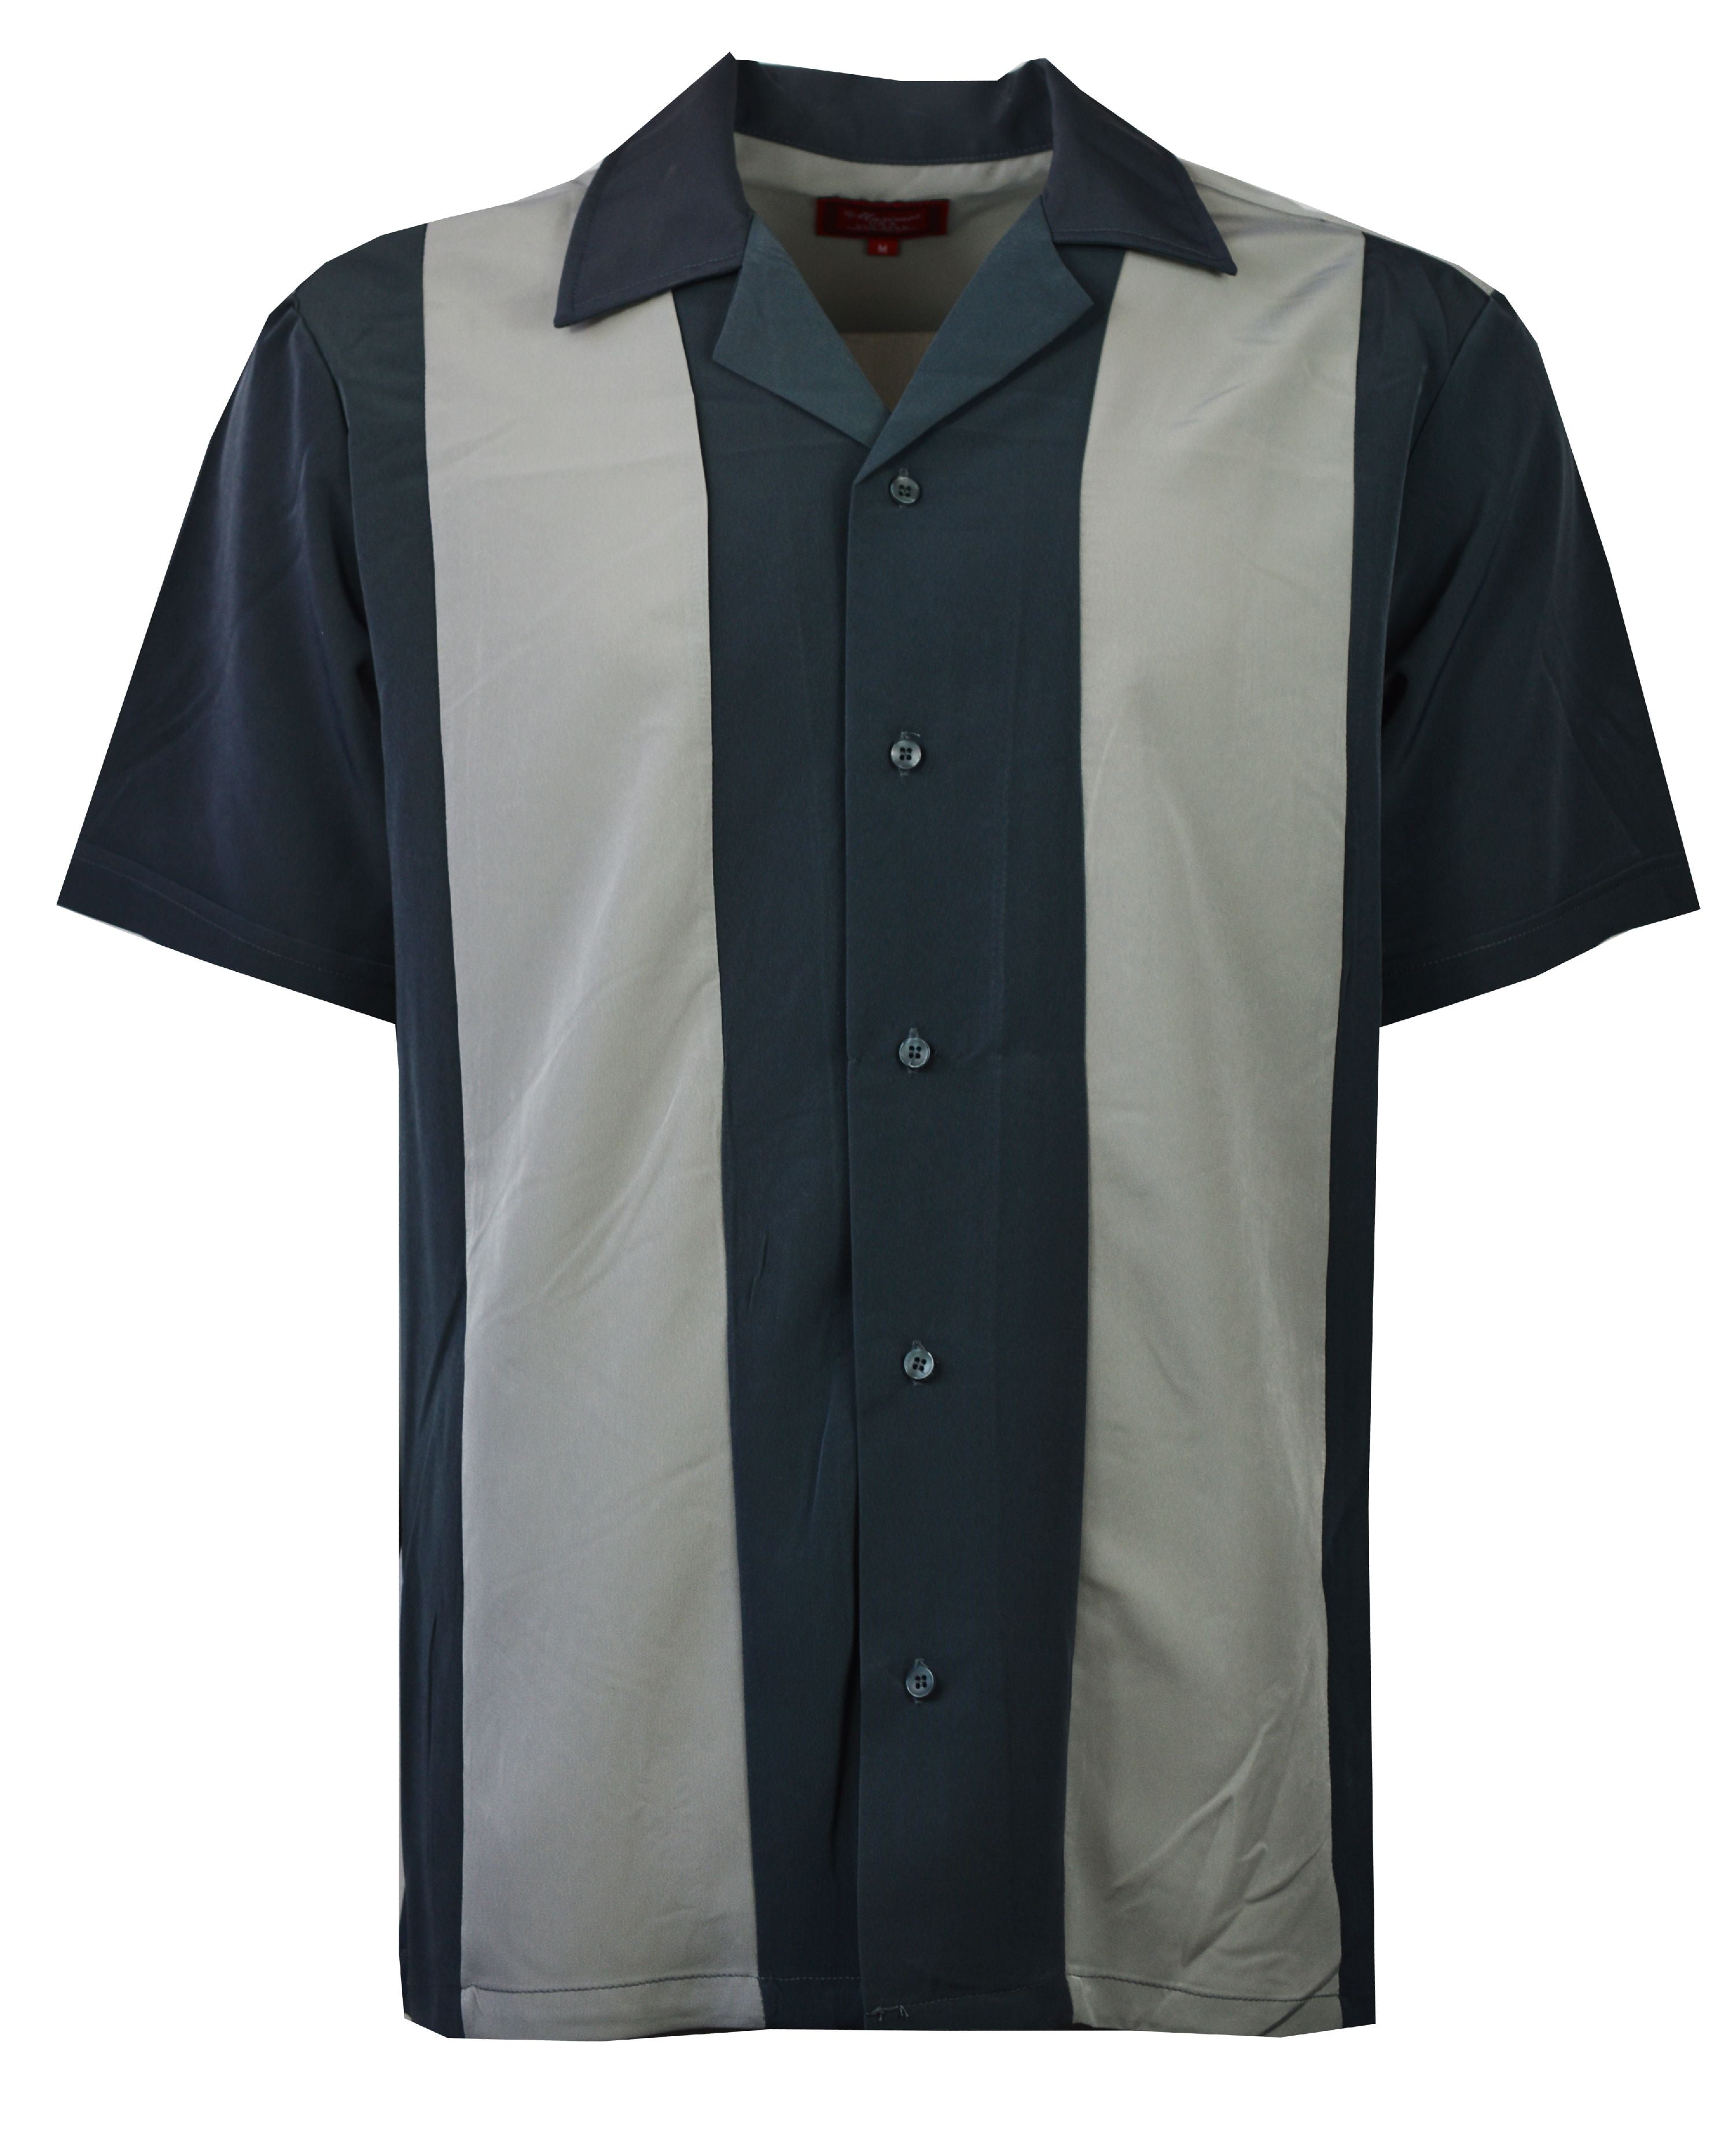 Maximos Men's Bowling Shirt Retro Button-Up Short Sleeved Striped Color Block Light Grey - Dark Grey L -